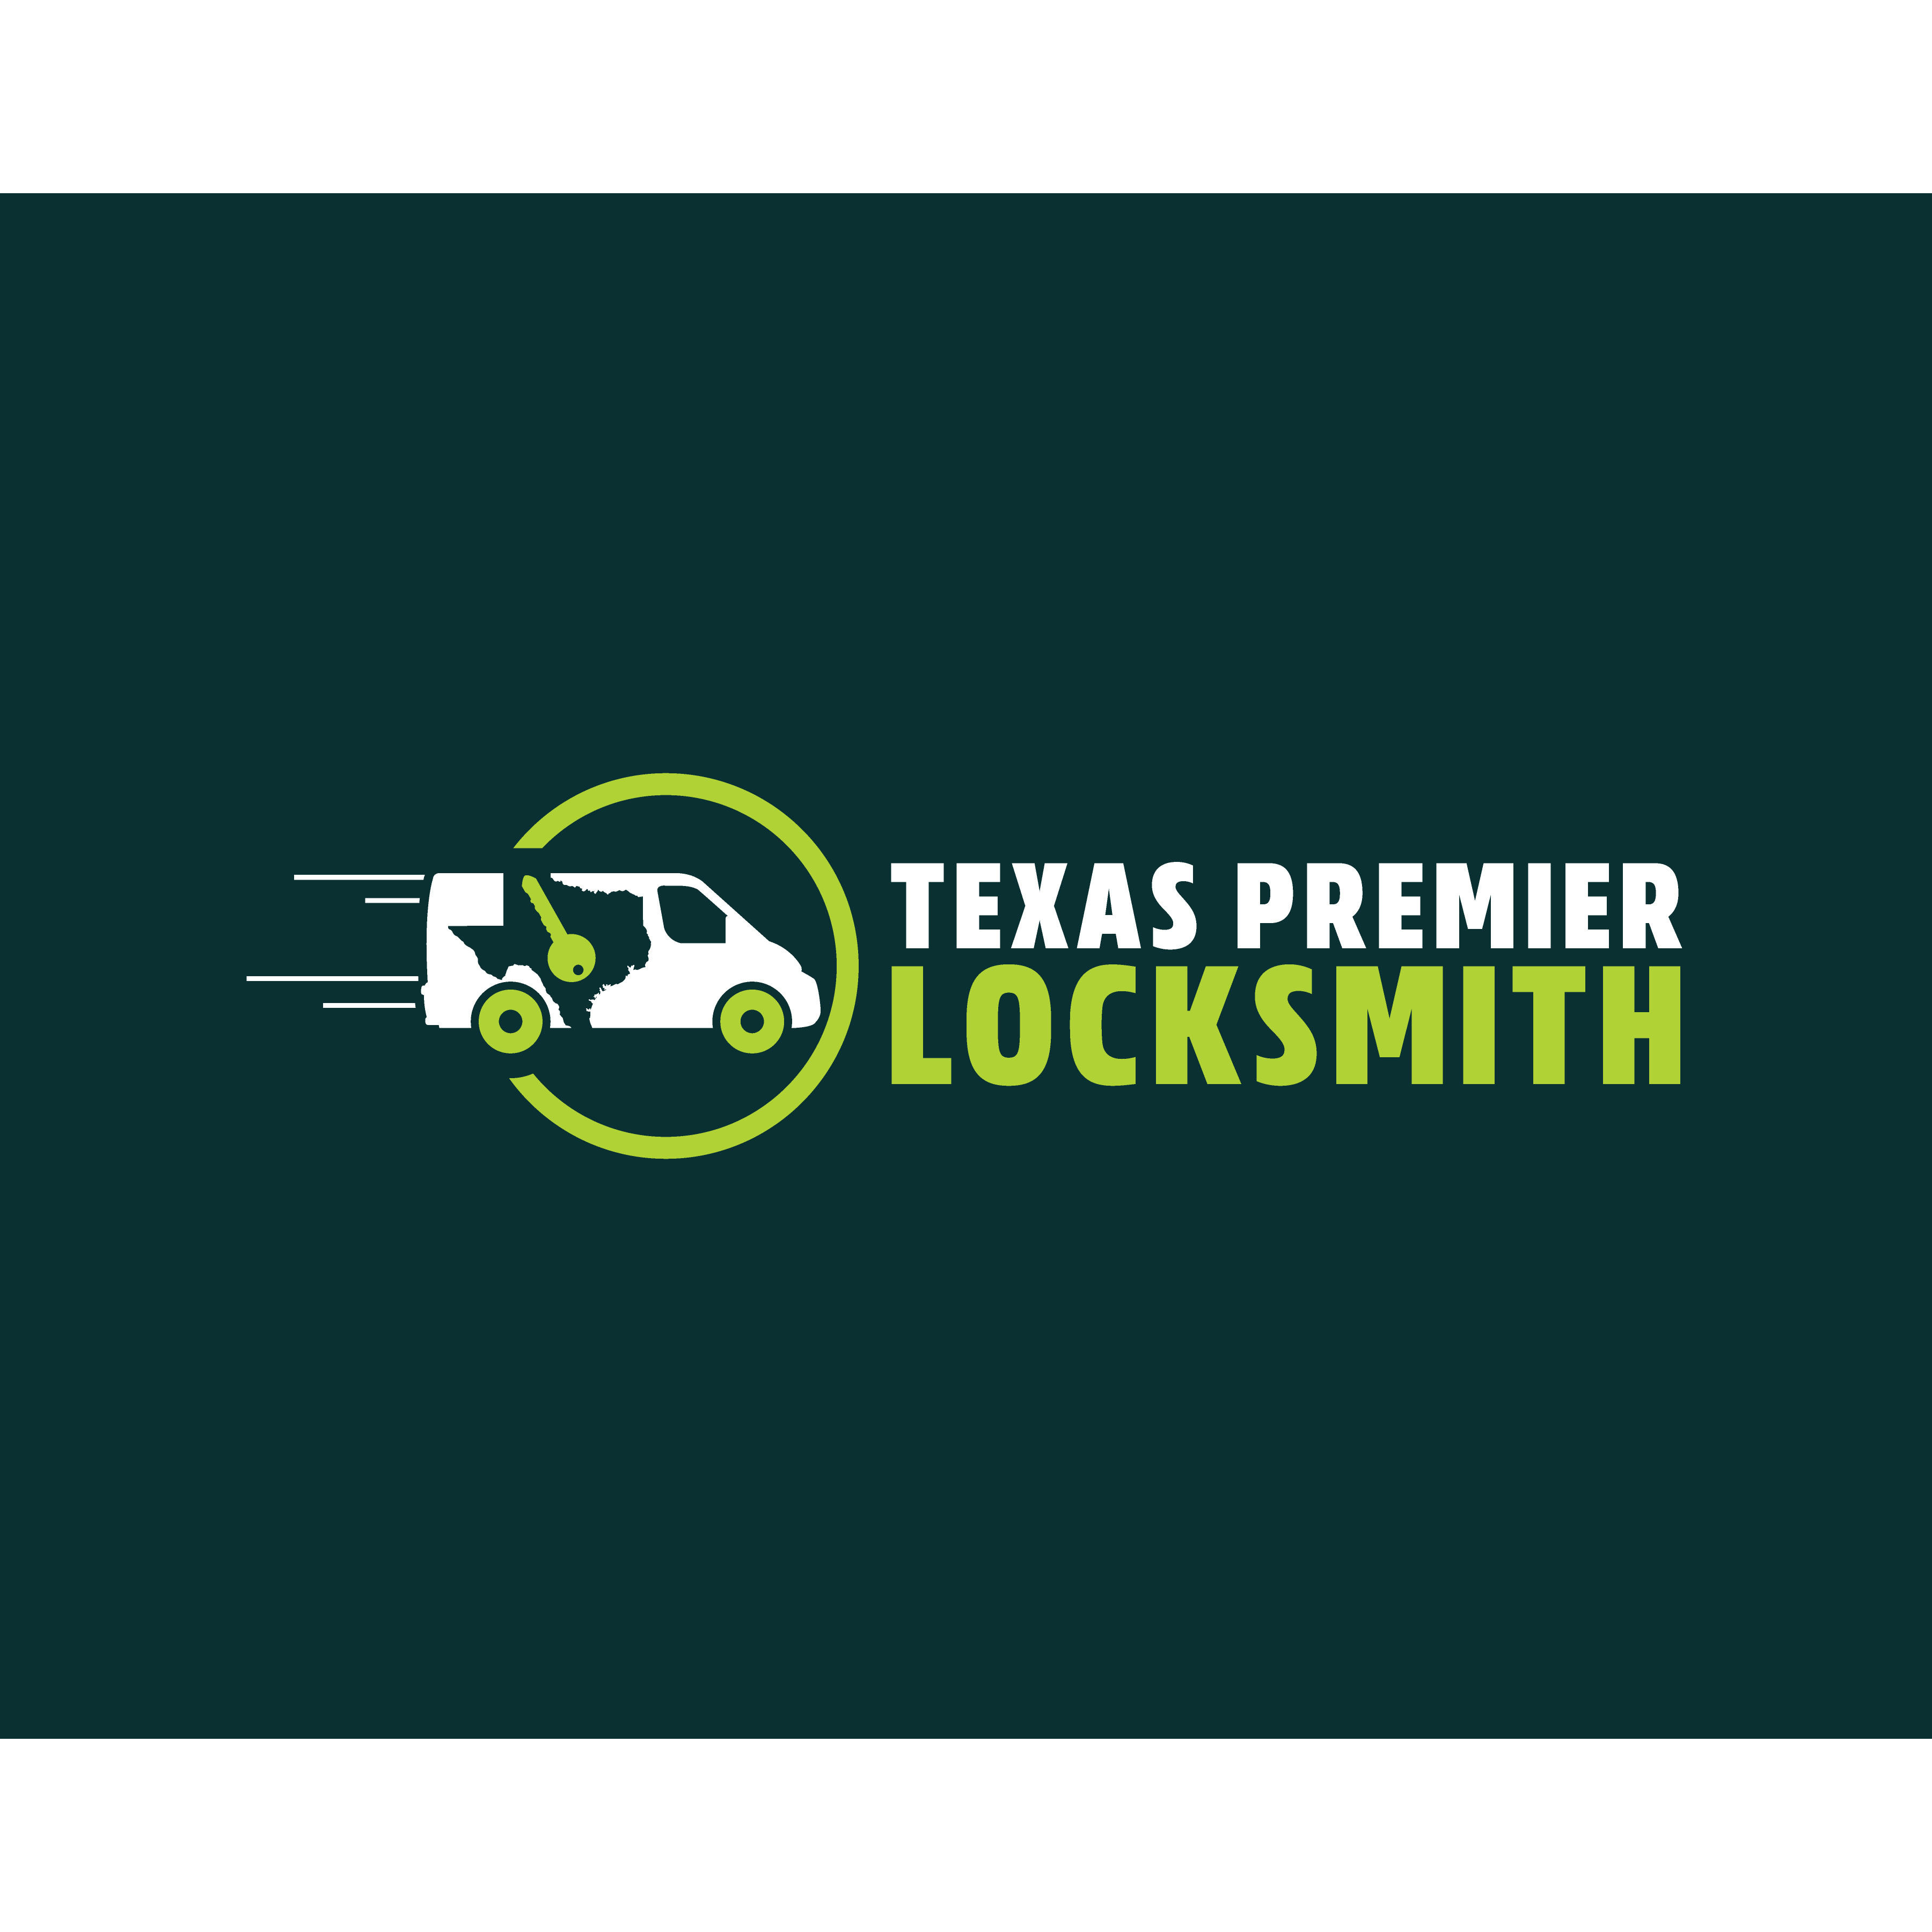 Texas Premier Locksmith - Houston, TX 77063 - (713)489-6866 | ShowMeLocal.com